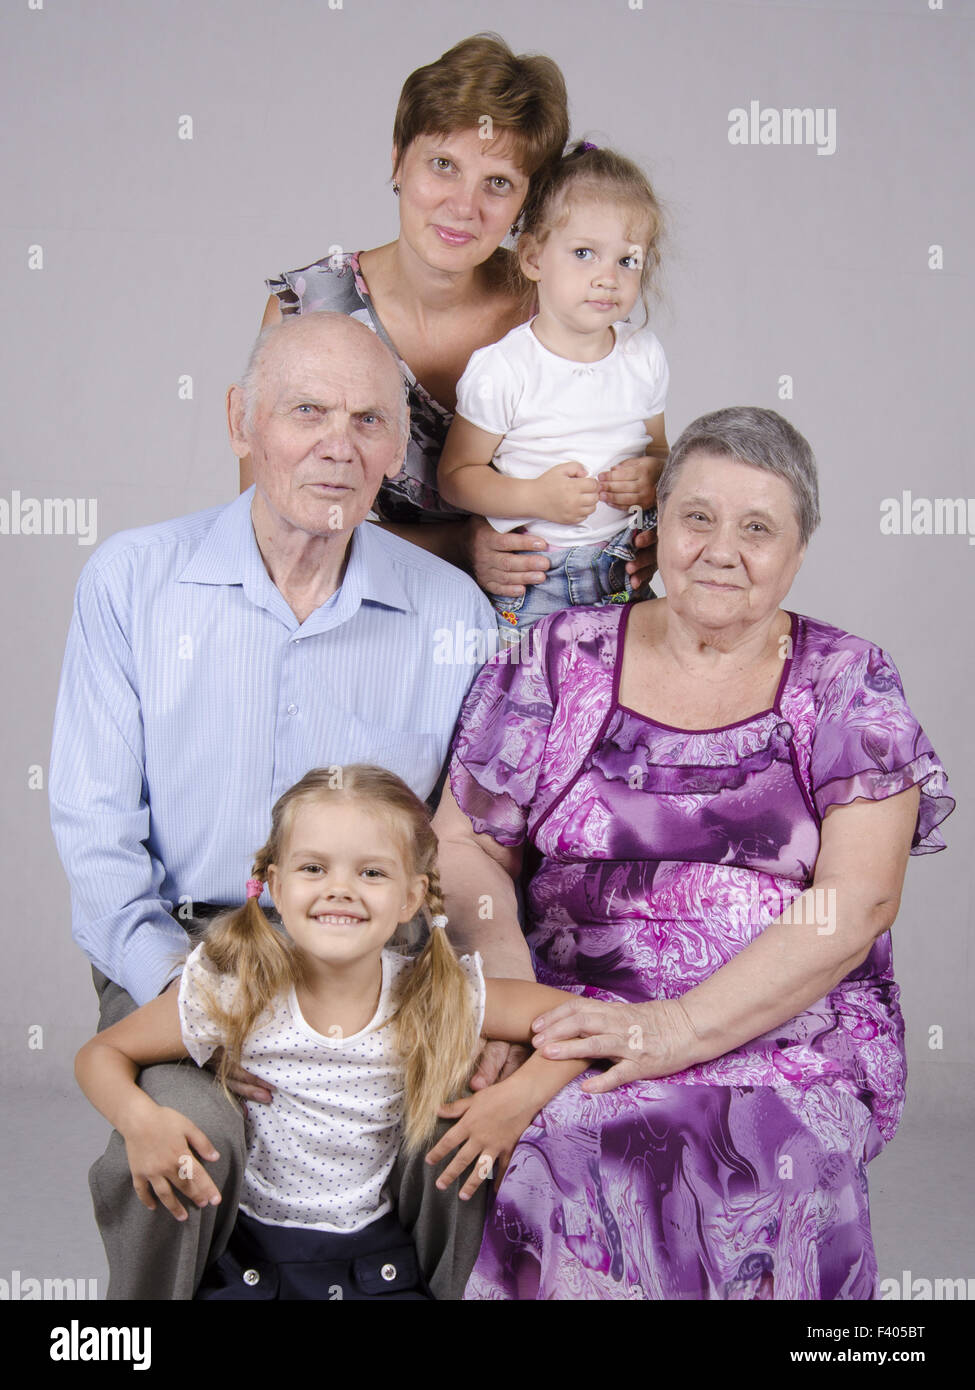 Group family portrait Stock Photo